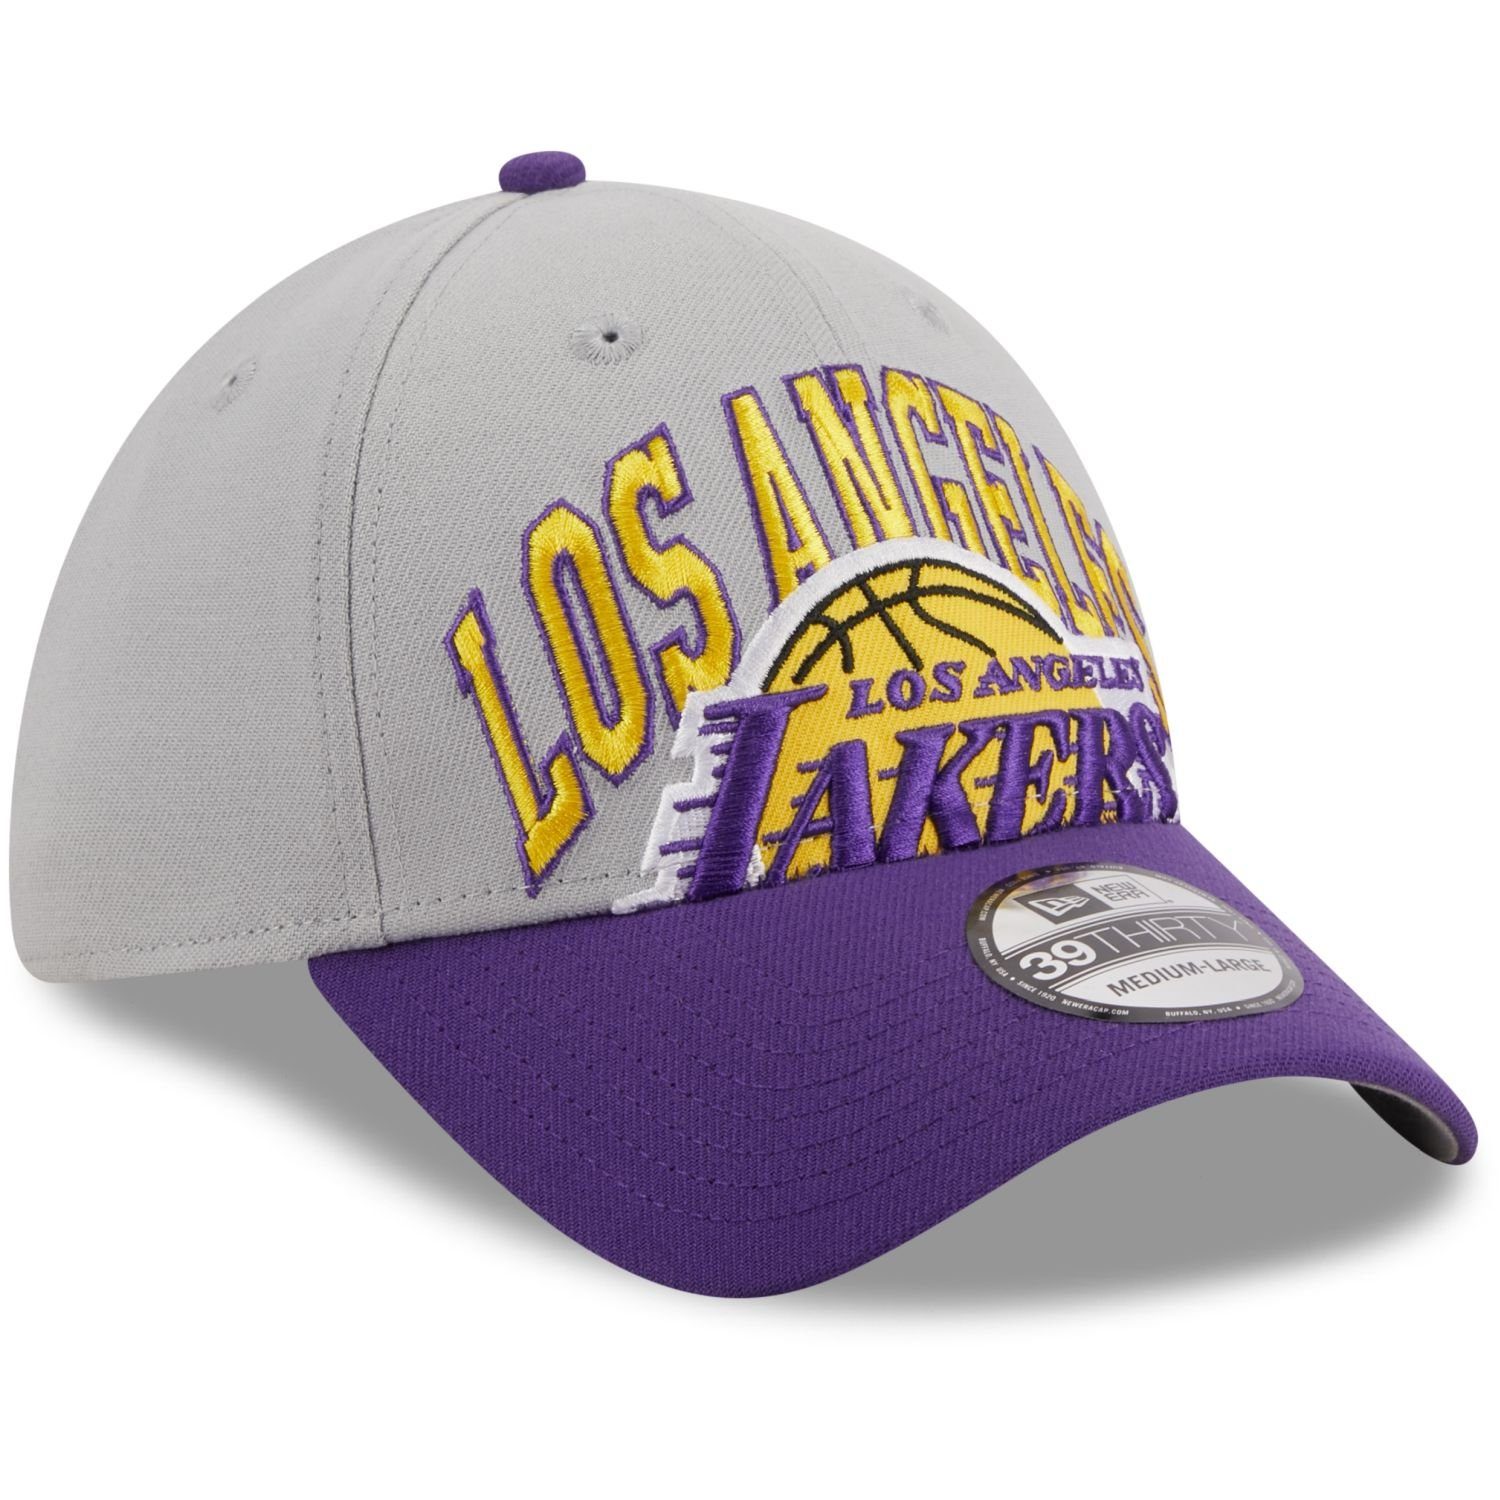 OFF TIP Flex Angeles NBA Los Cap Era 39Thirty New Lakers